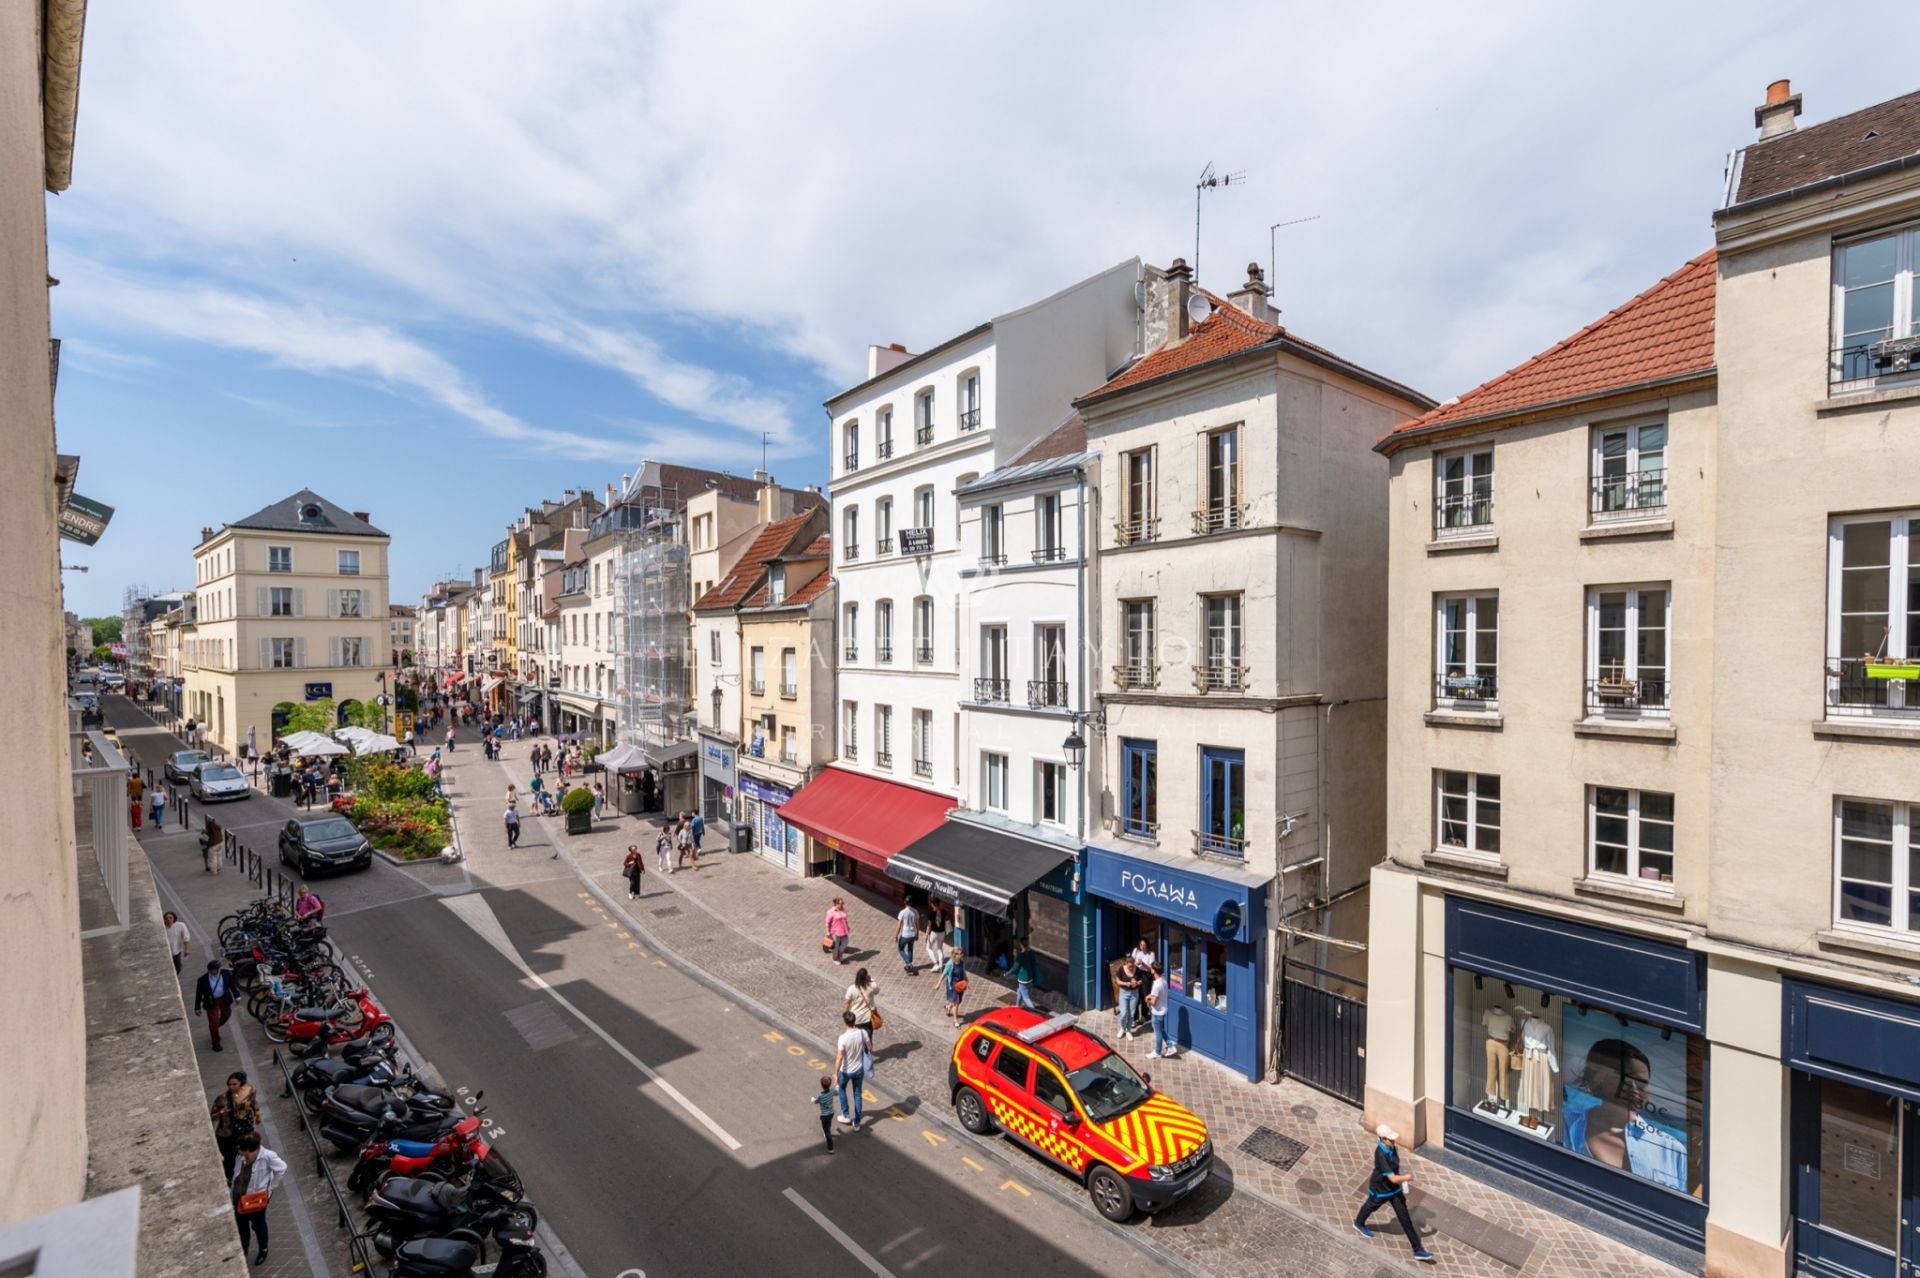 apartment 5 rooms for sale on Saint-Germain-en-Laye (78100)